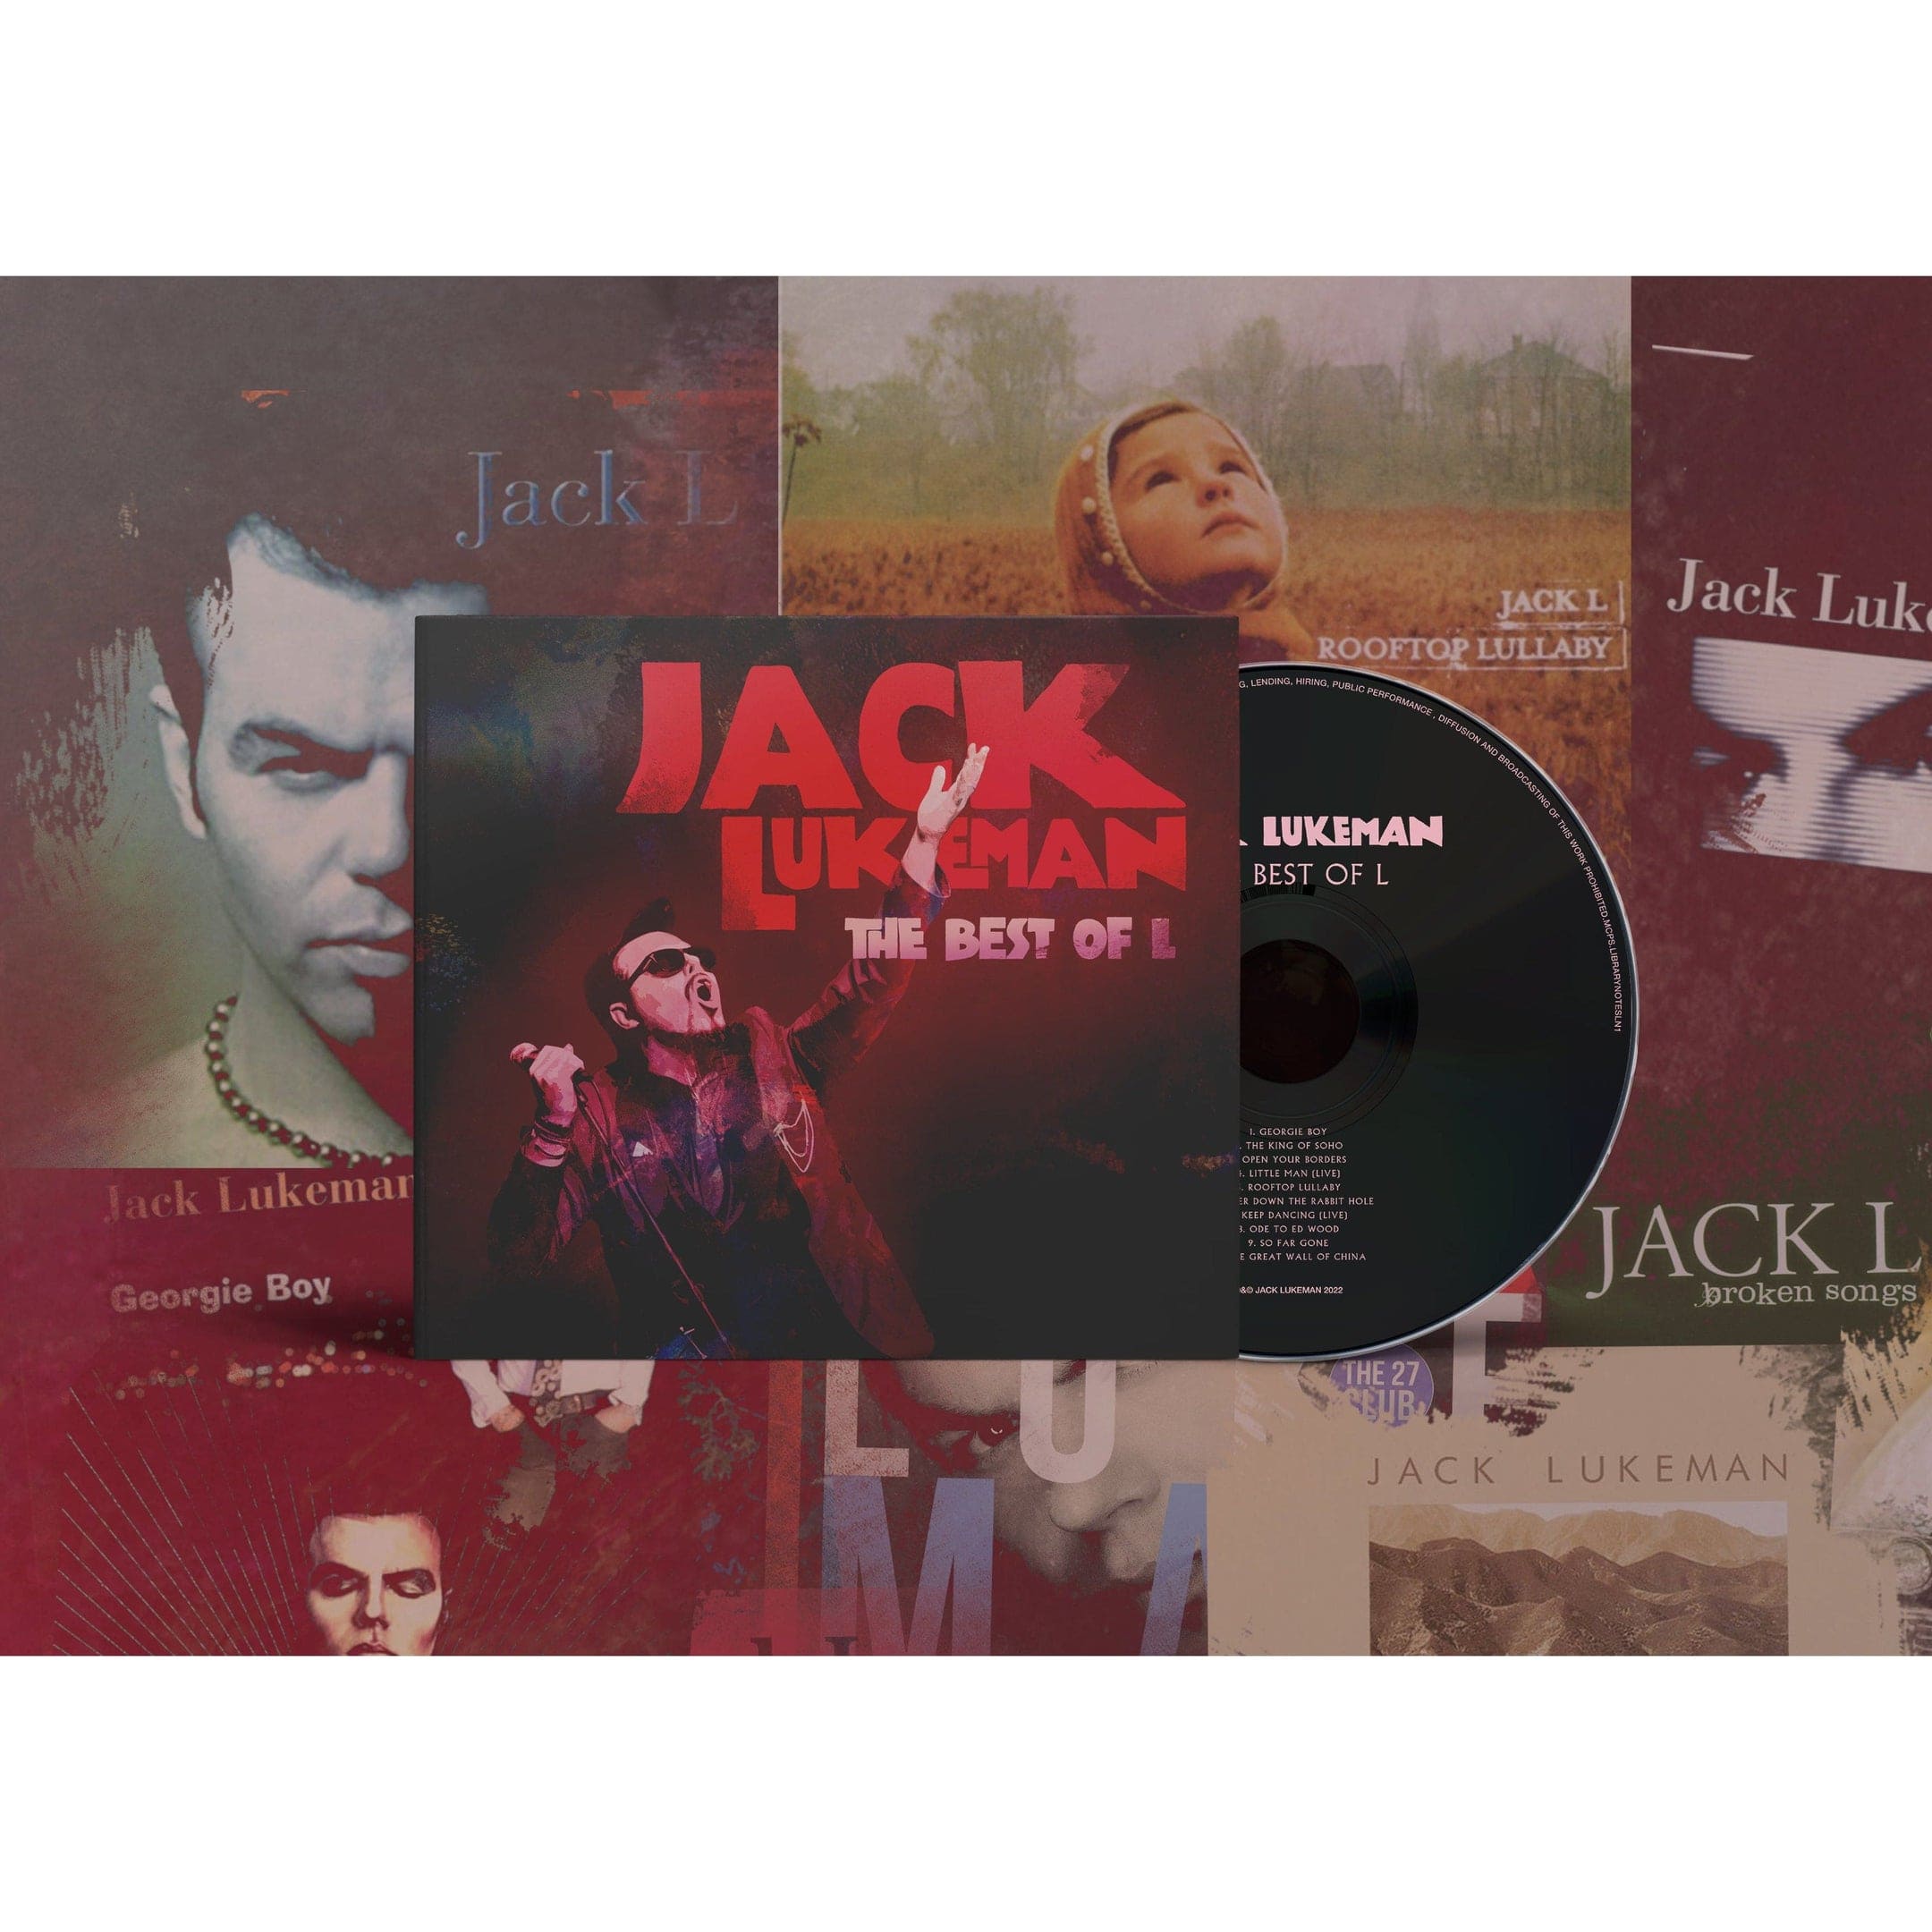 The Best of L - Jack Lukeman [CD]